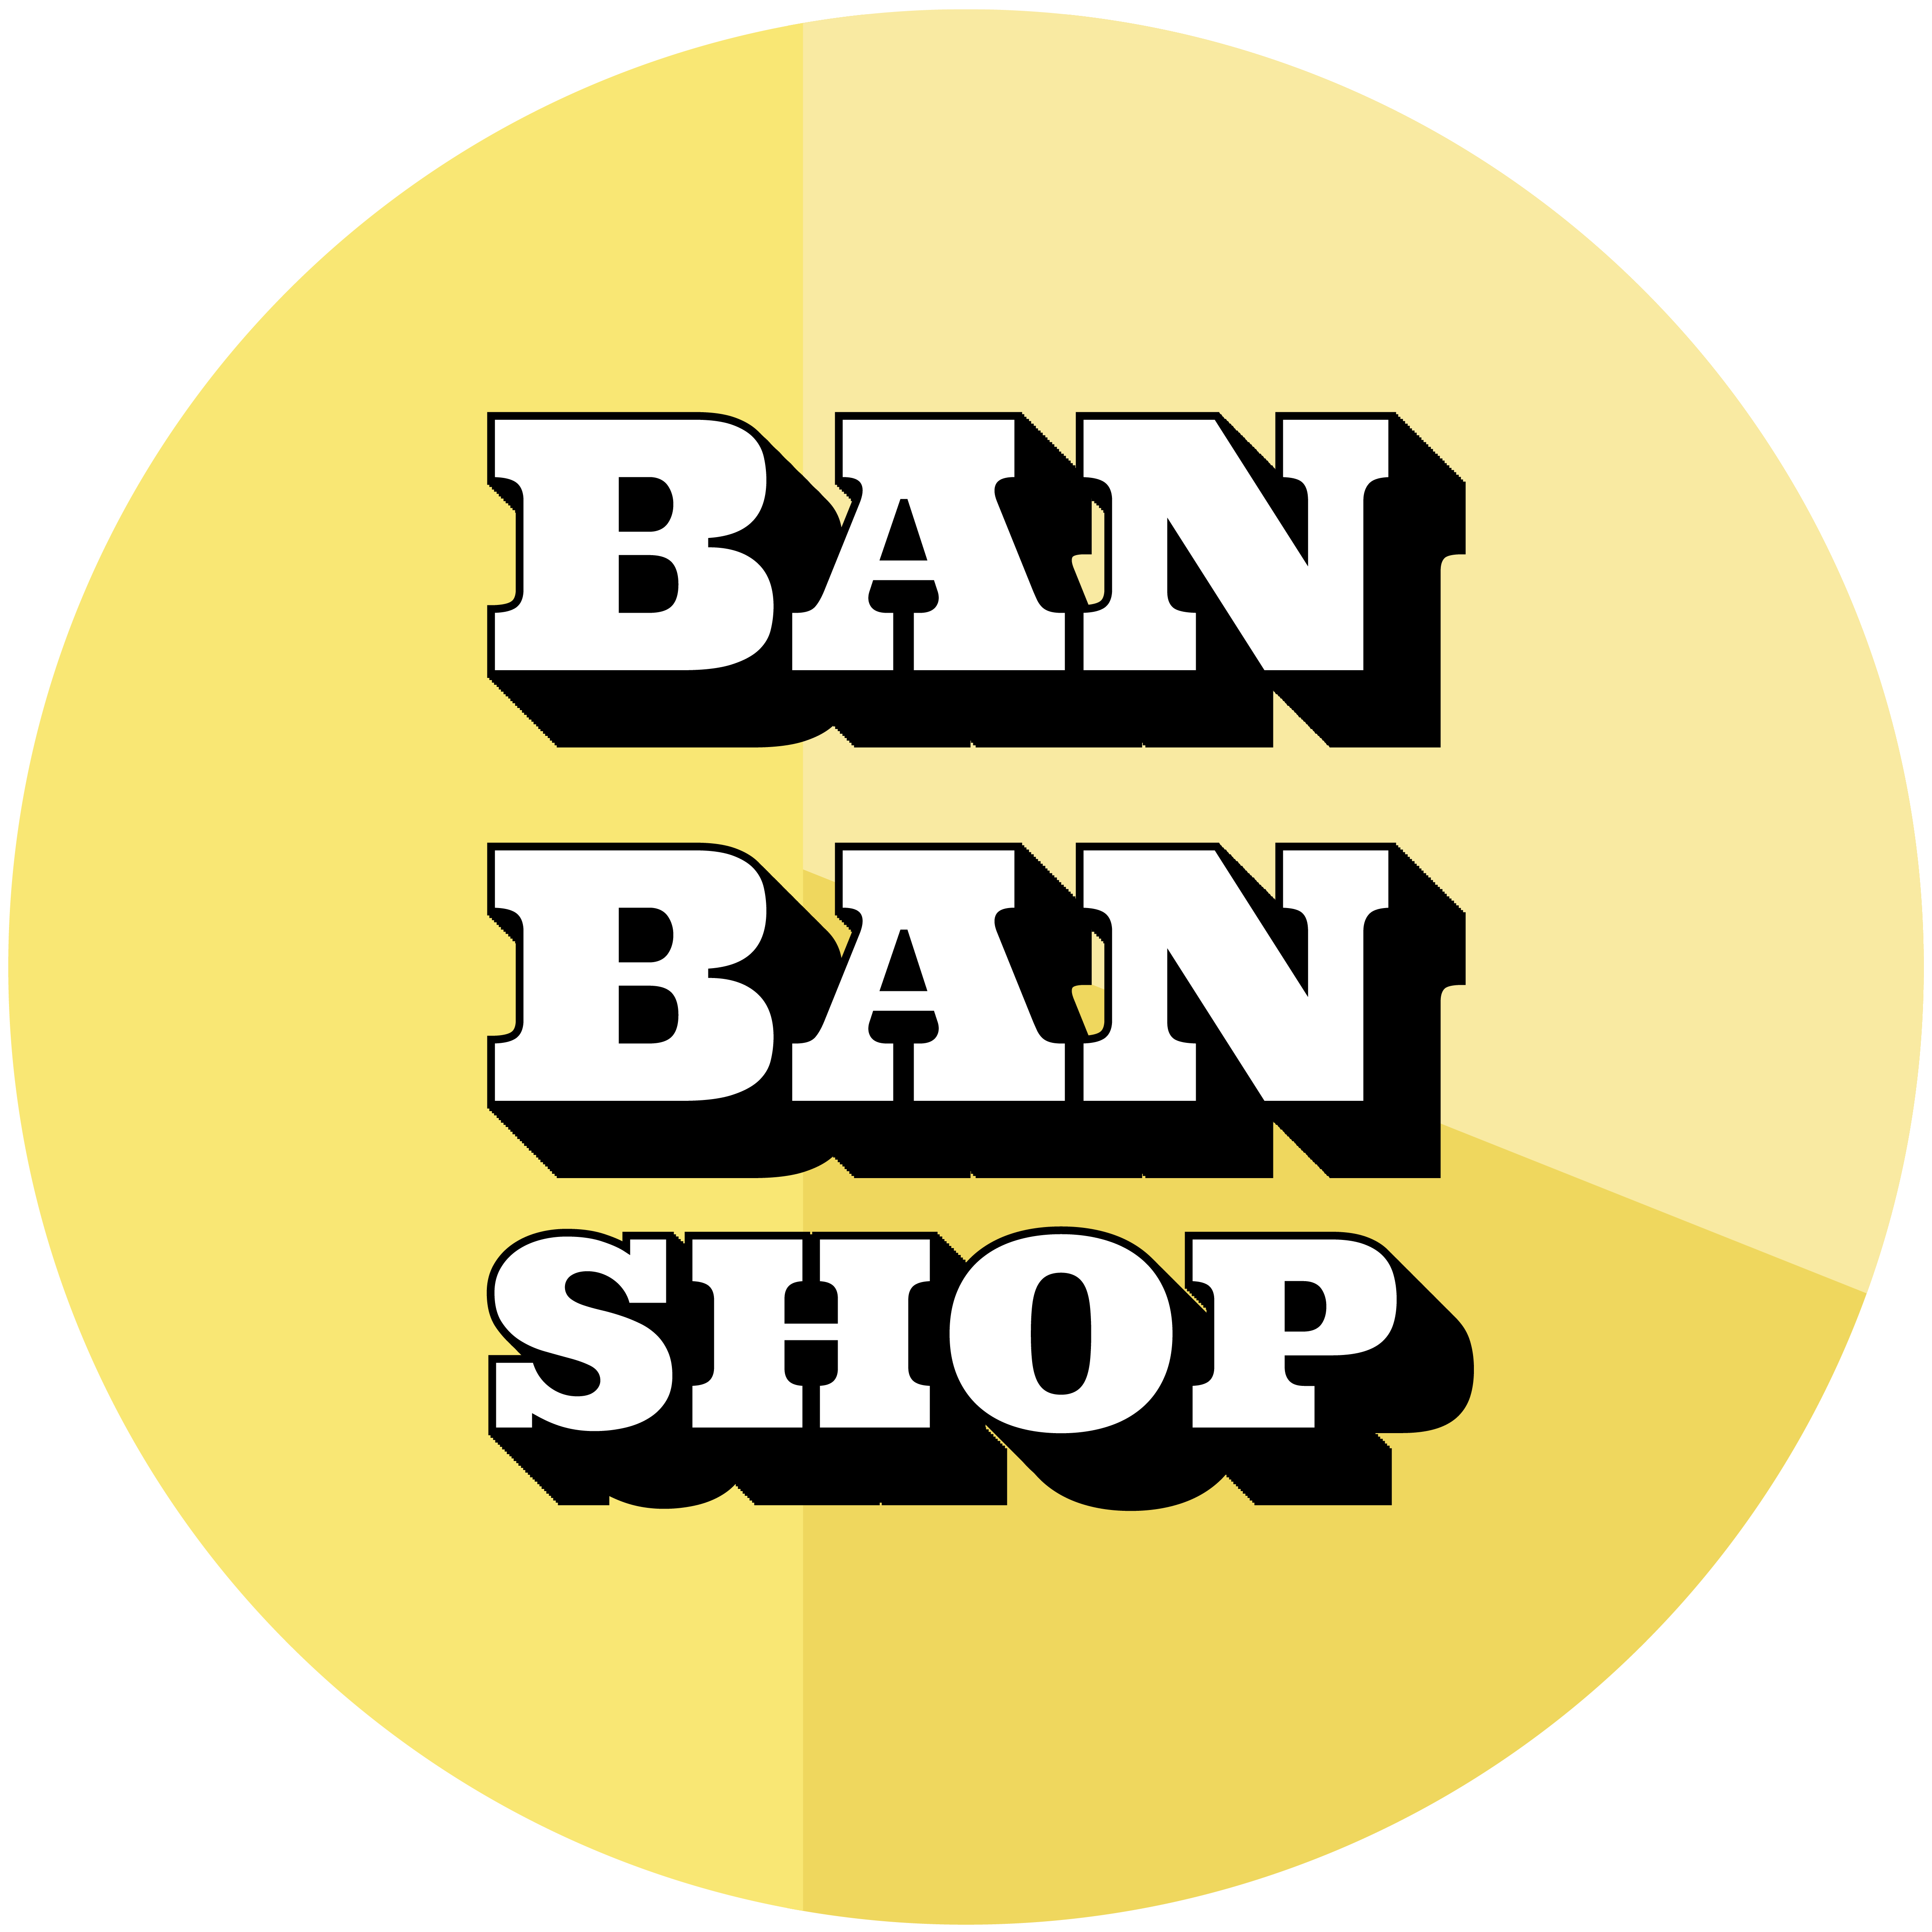 Ban Ban Shop